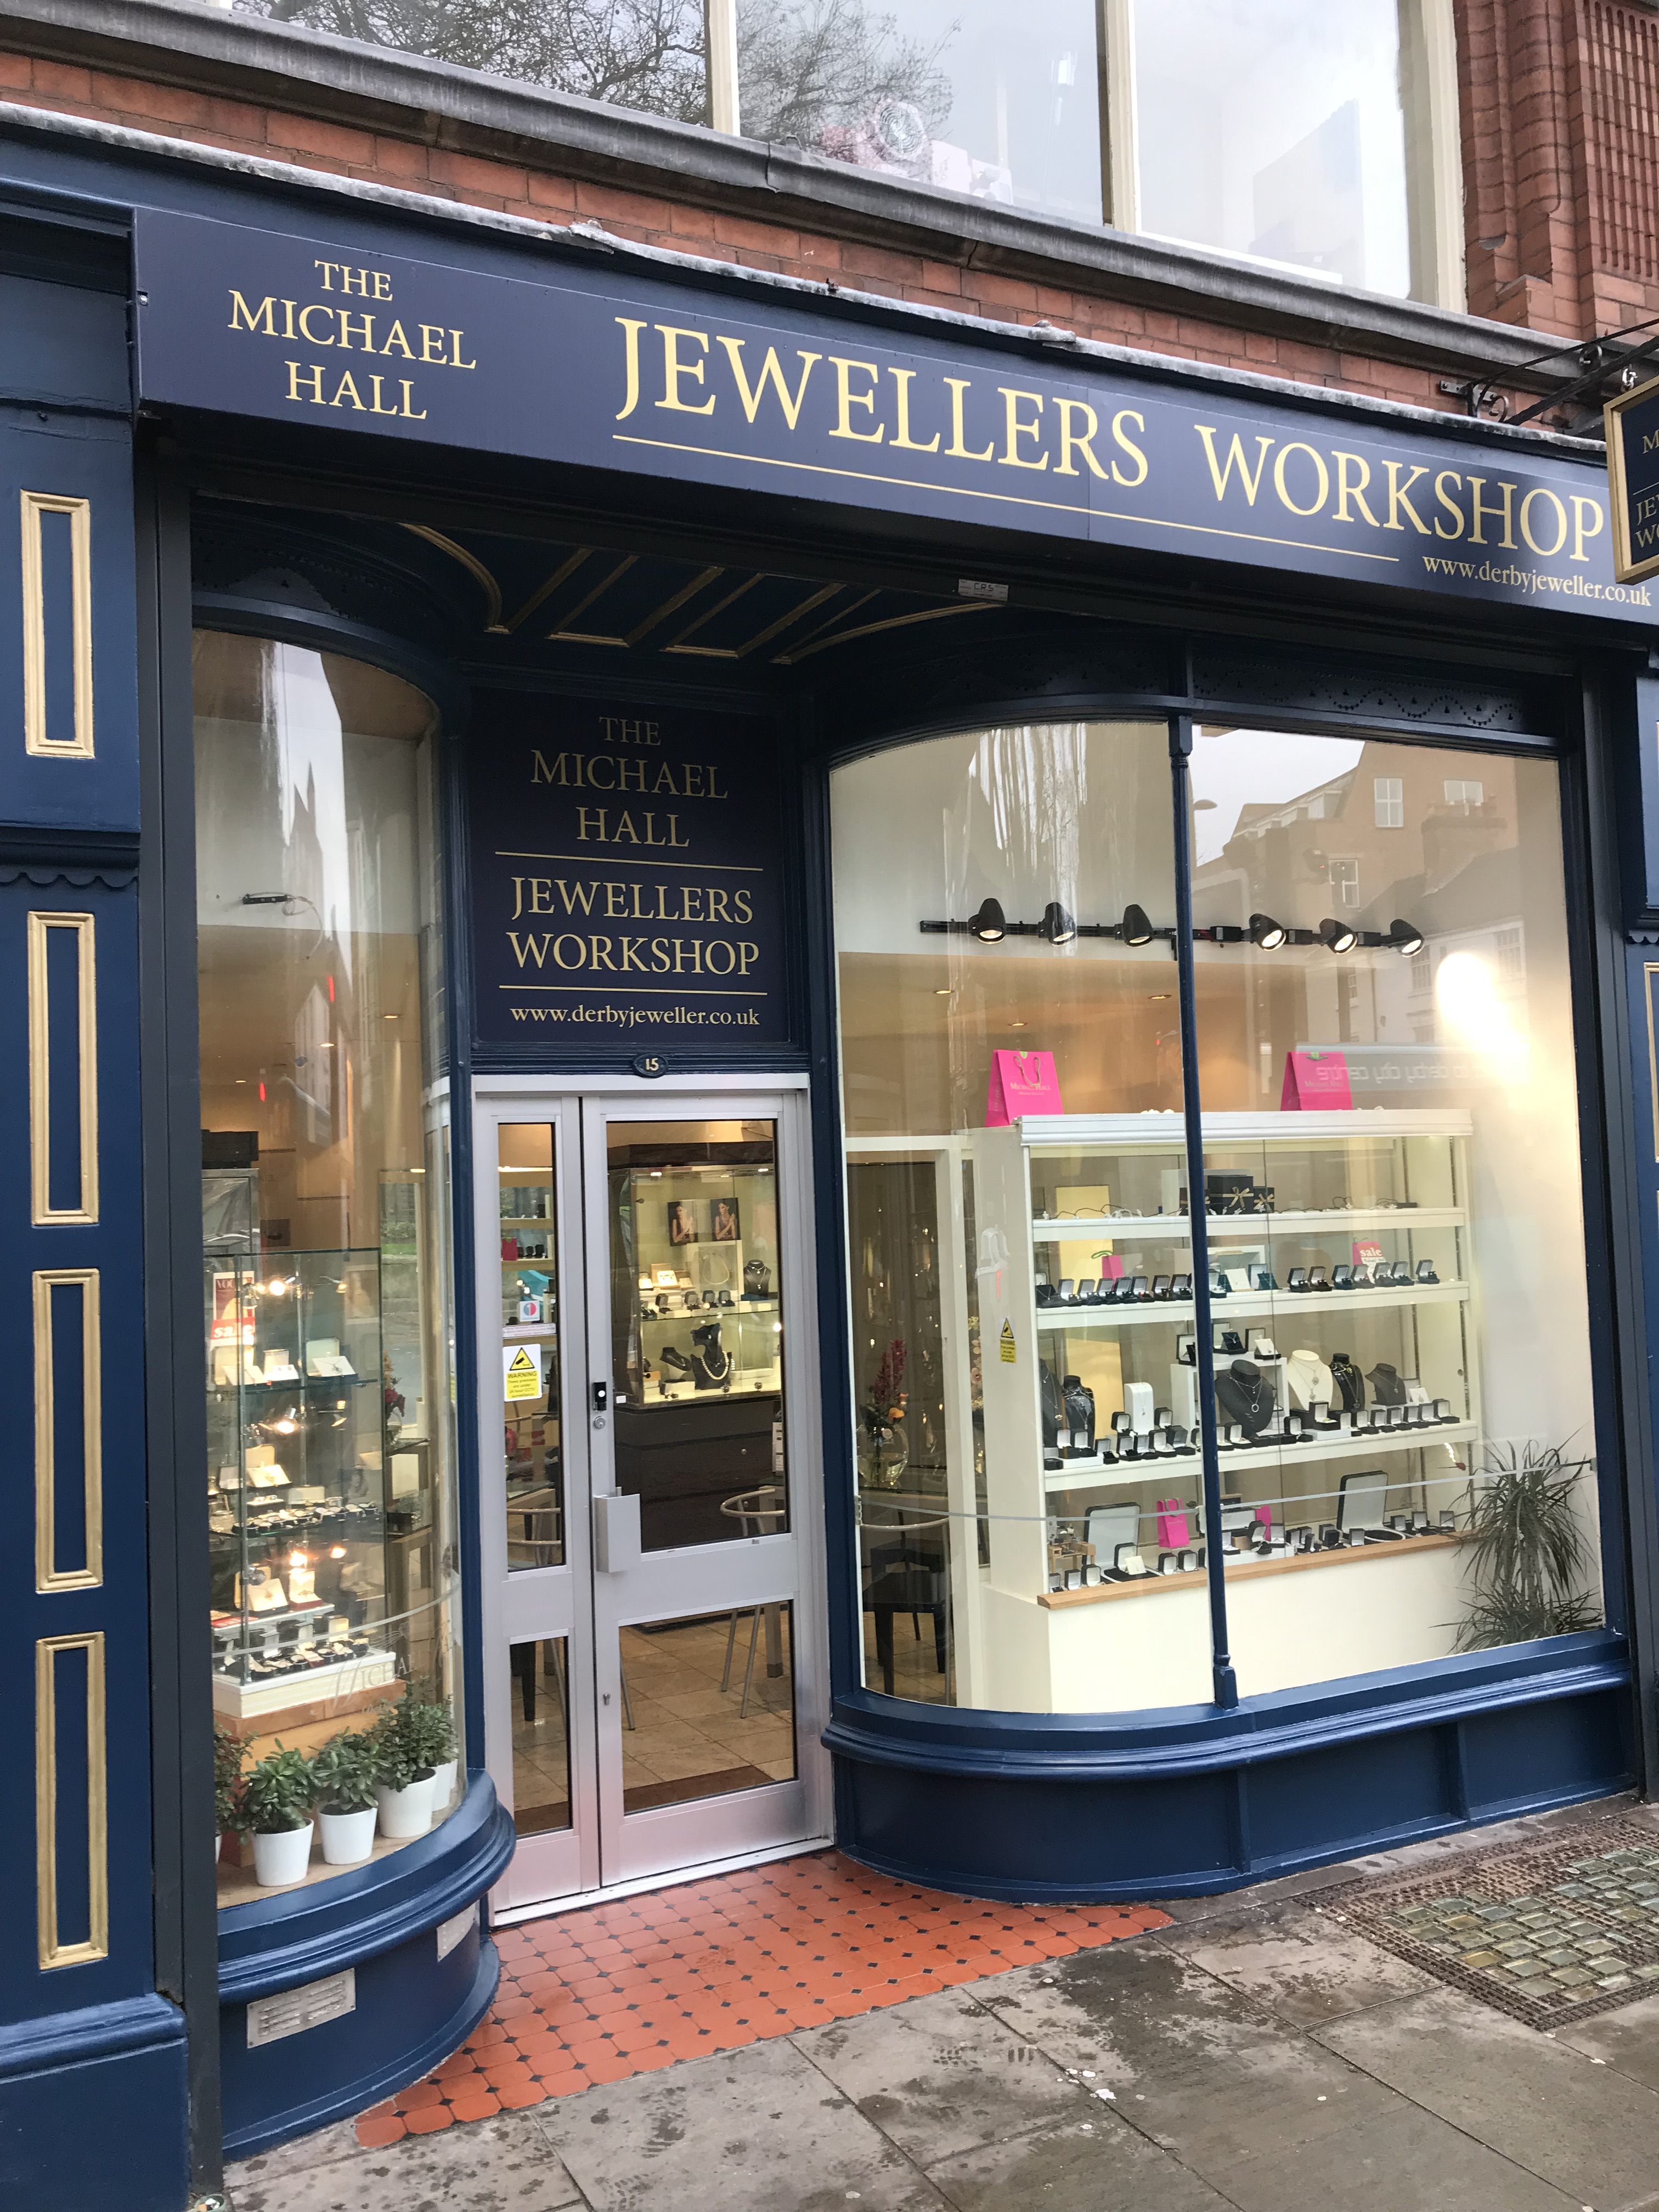 The Michael Hall Jewellers Workshop